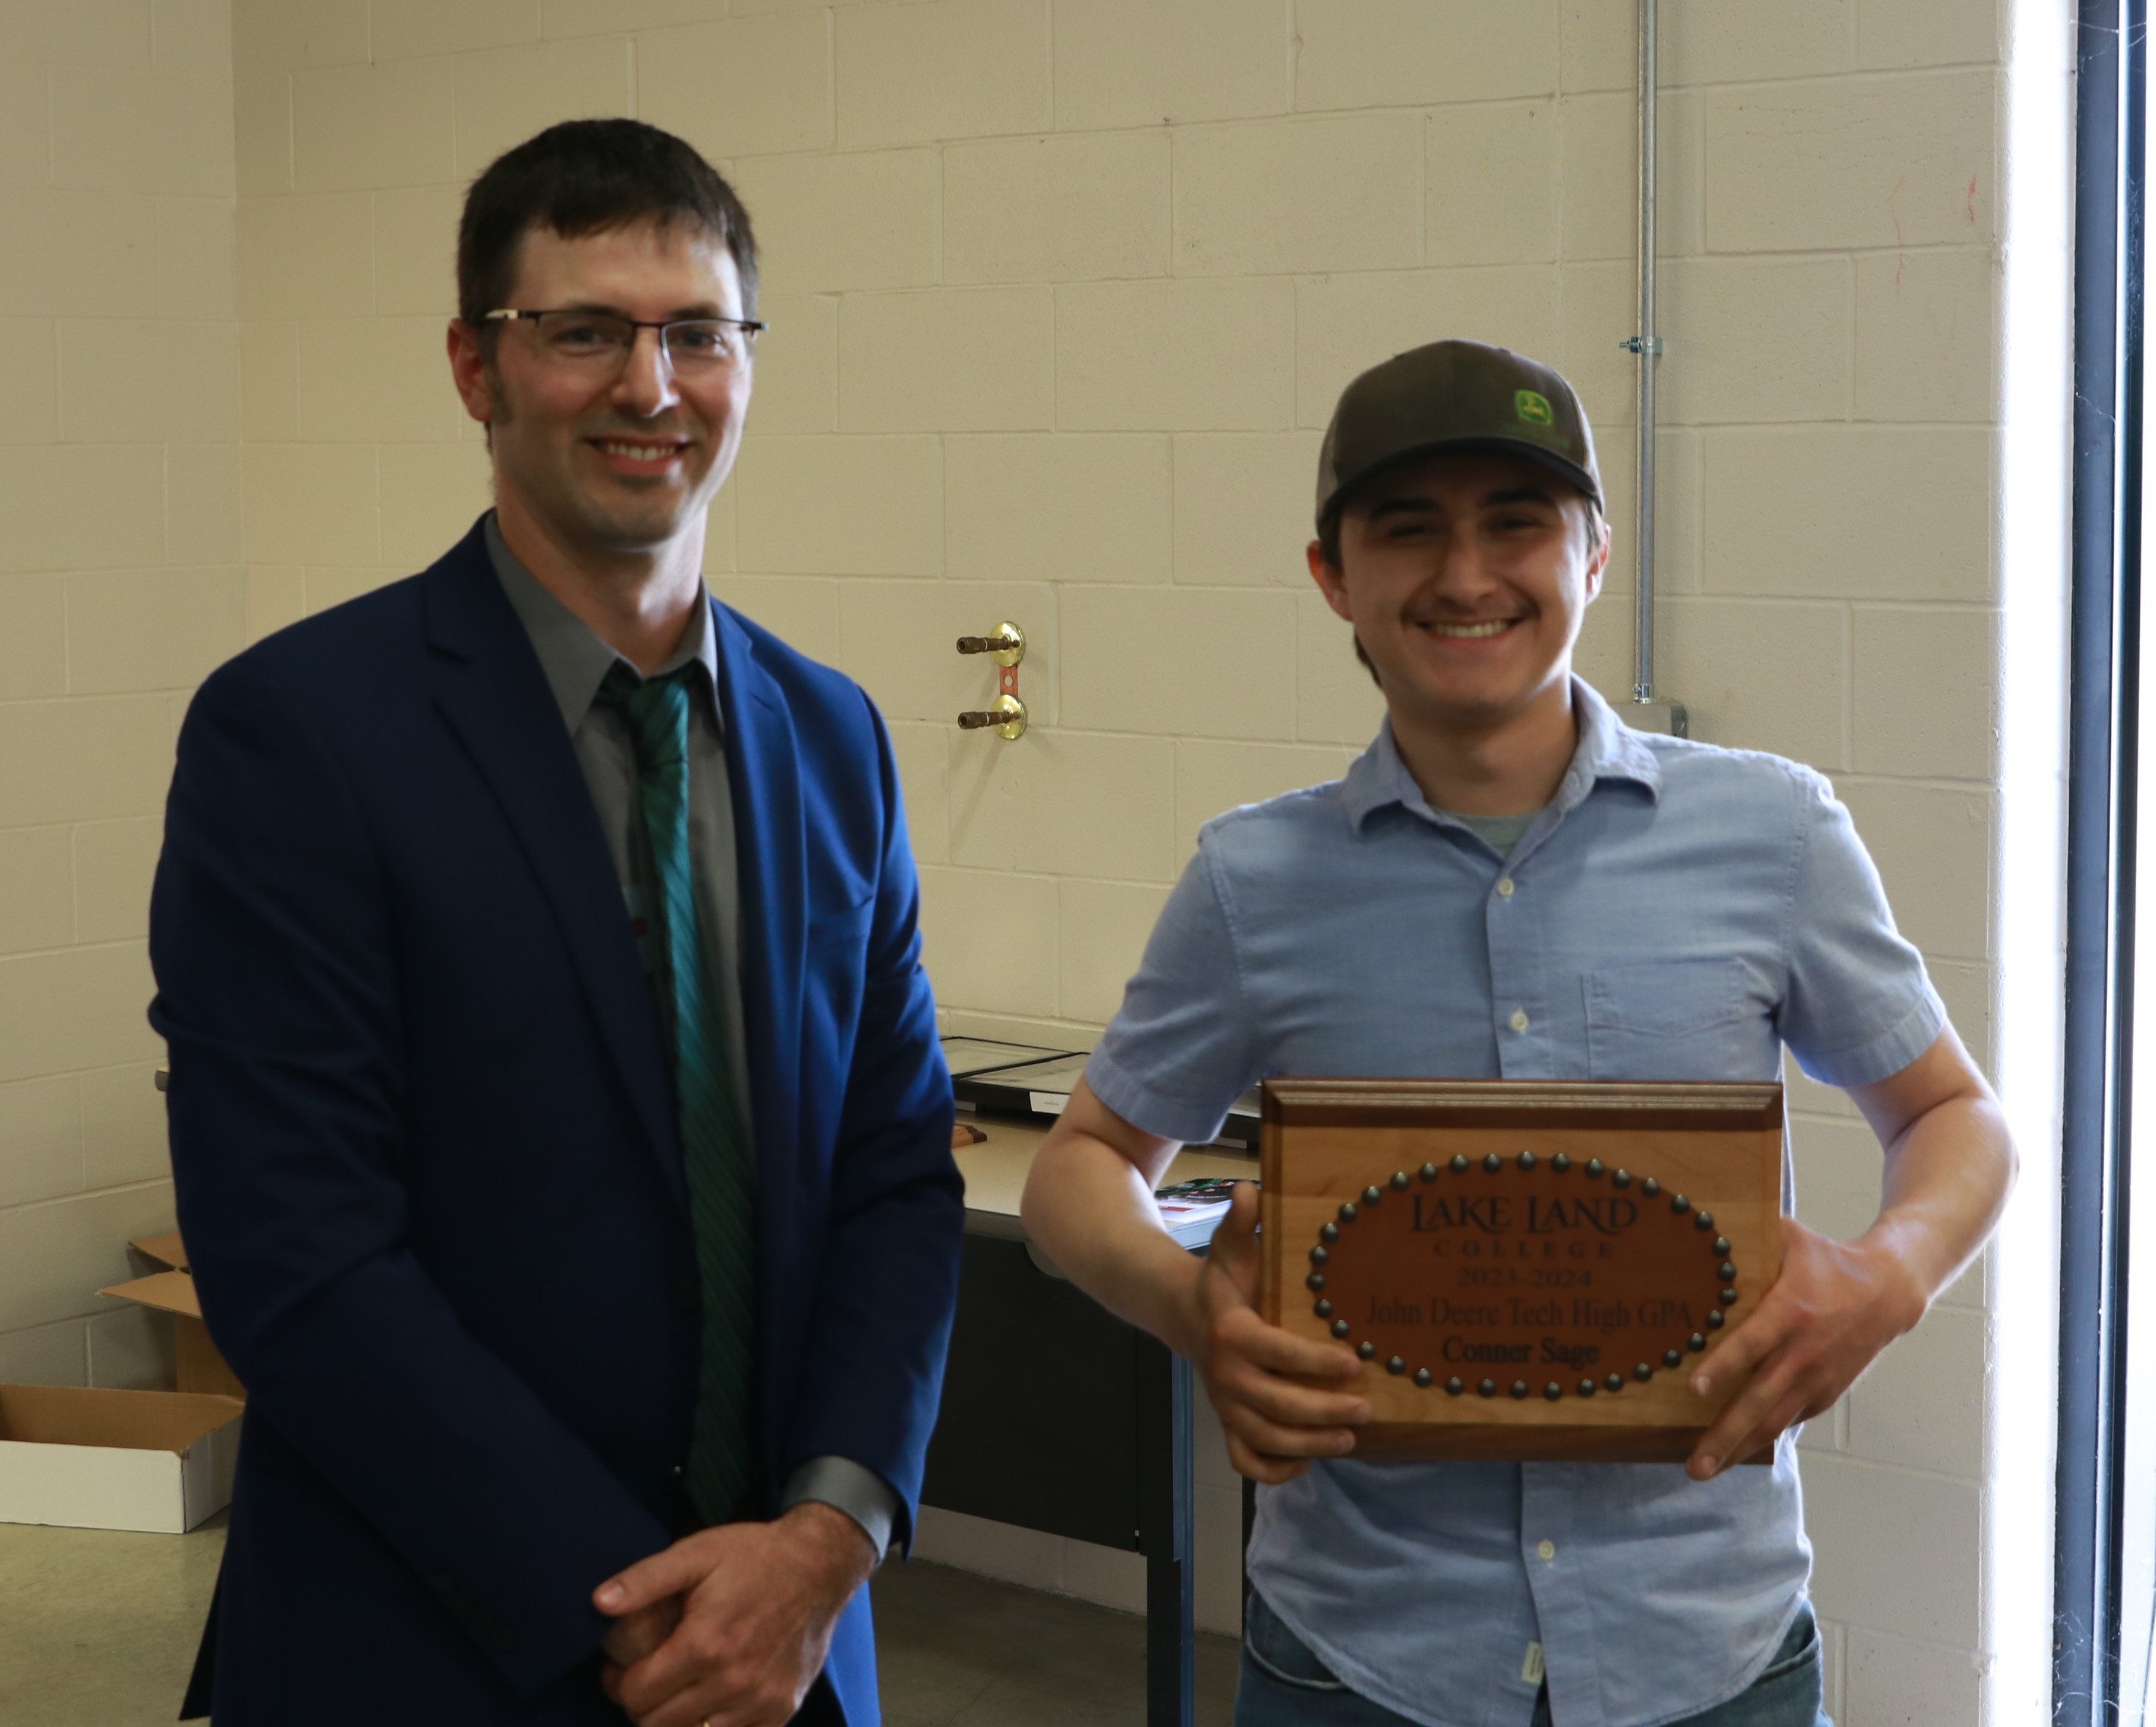 A John Deere Instructor presenting an award to a graduating student